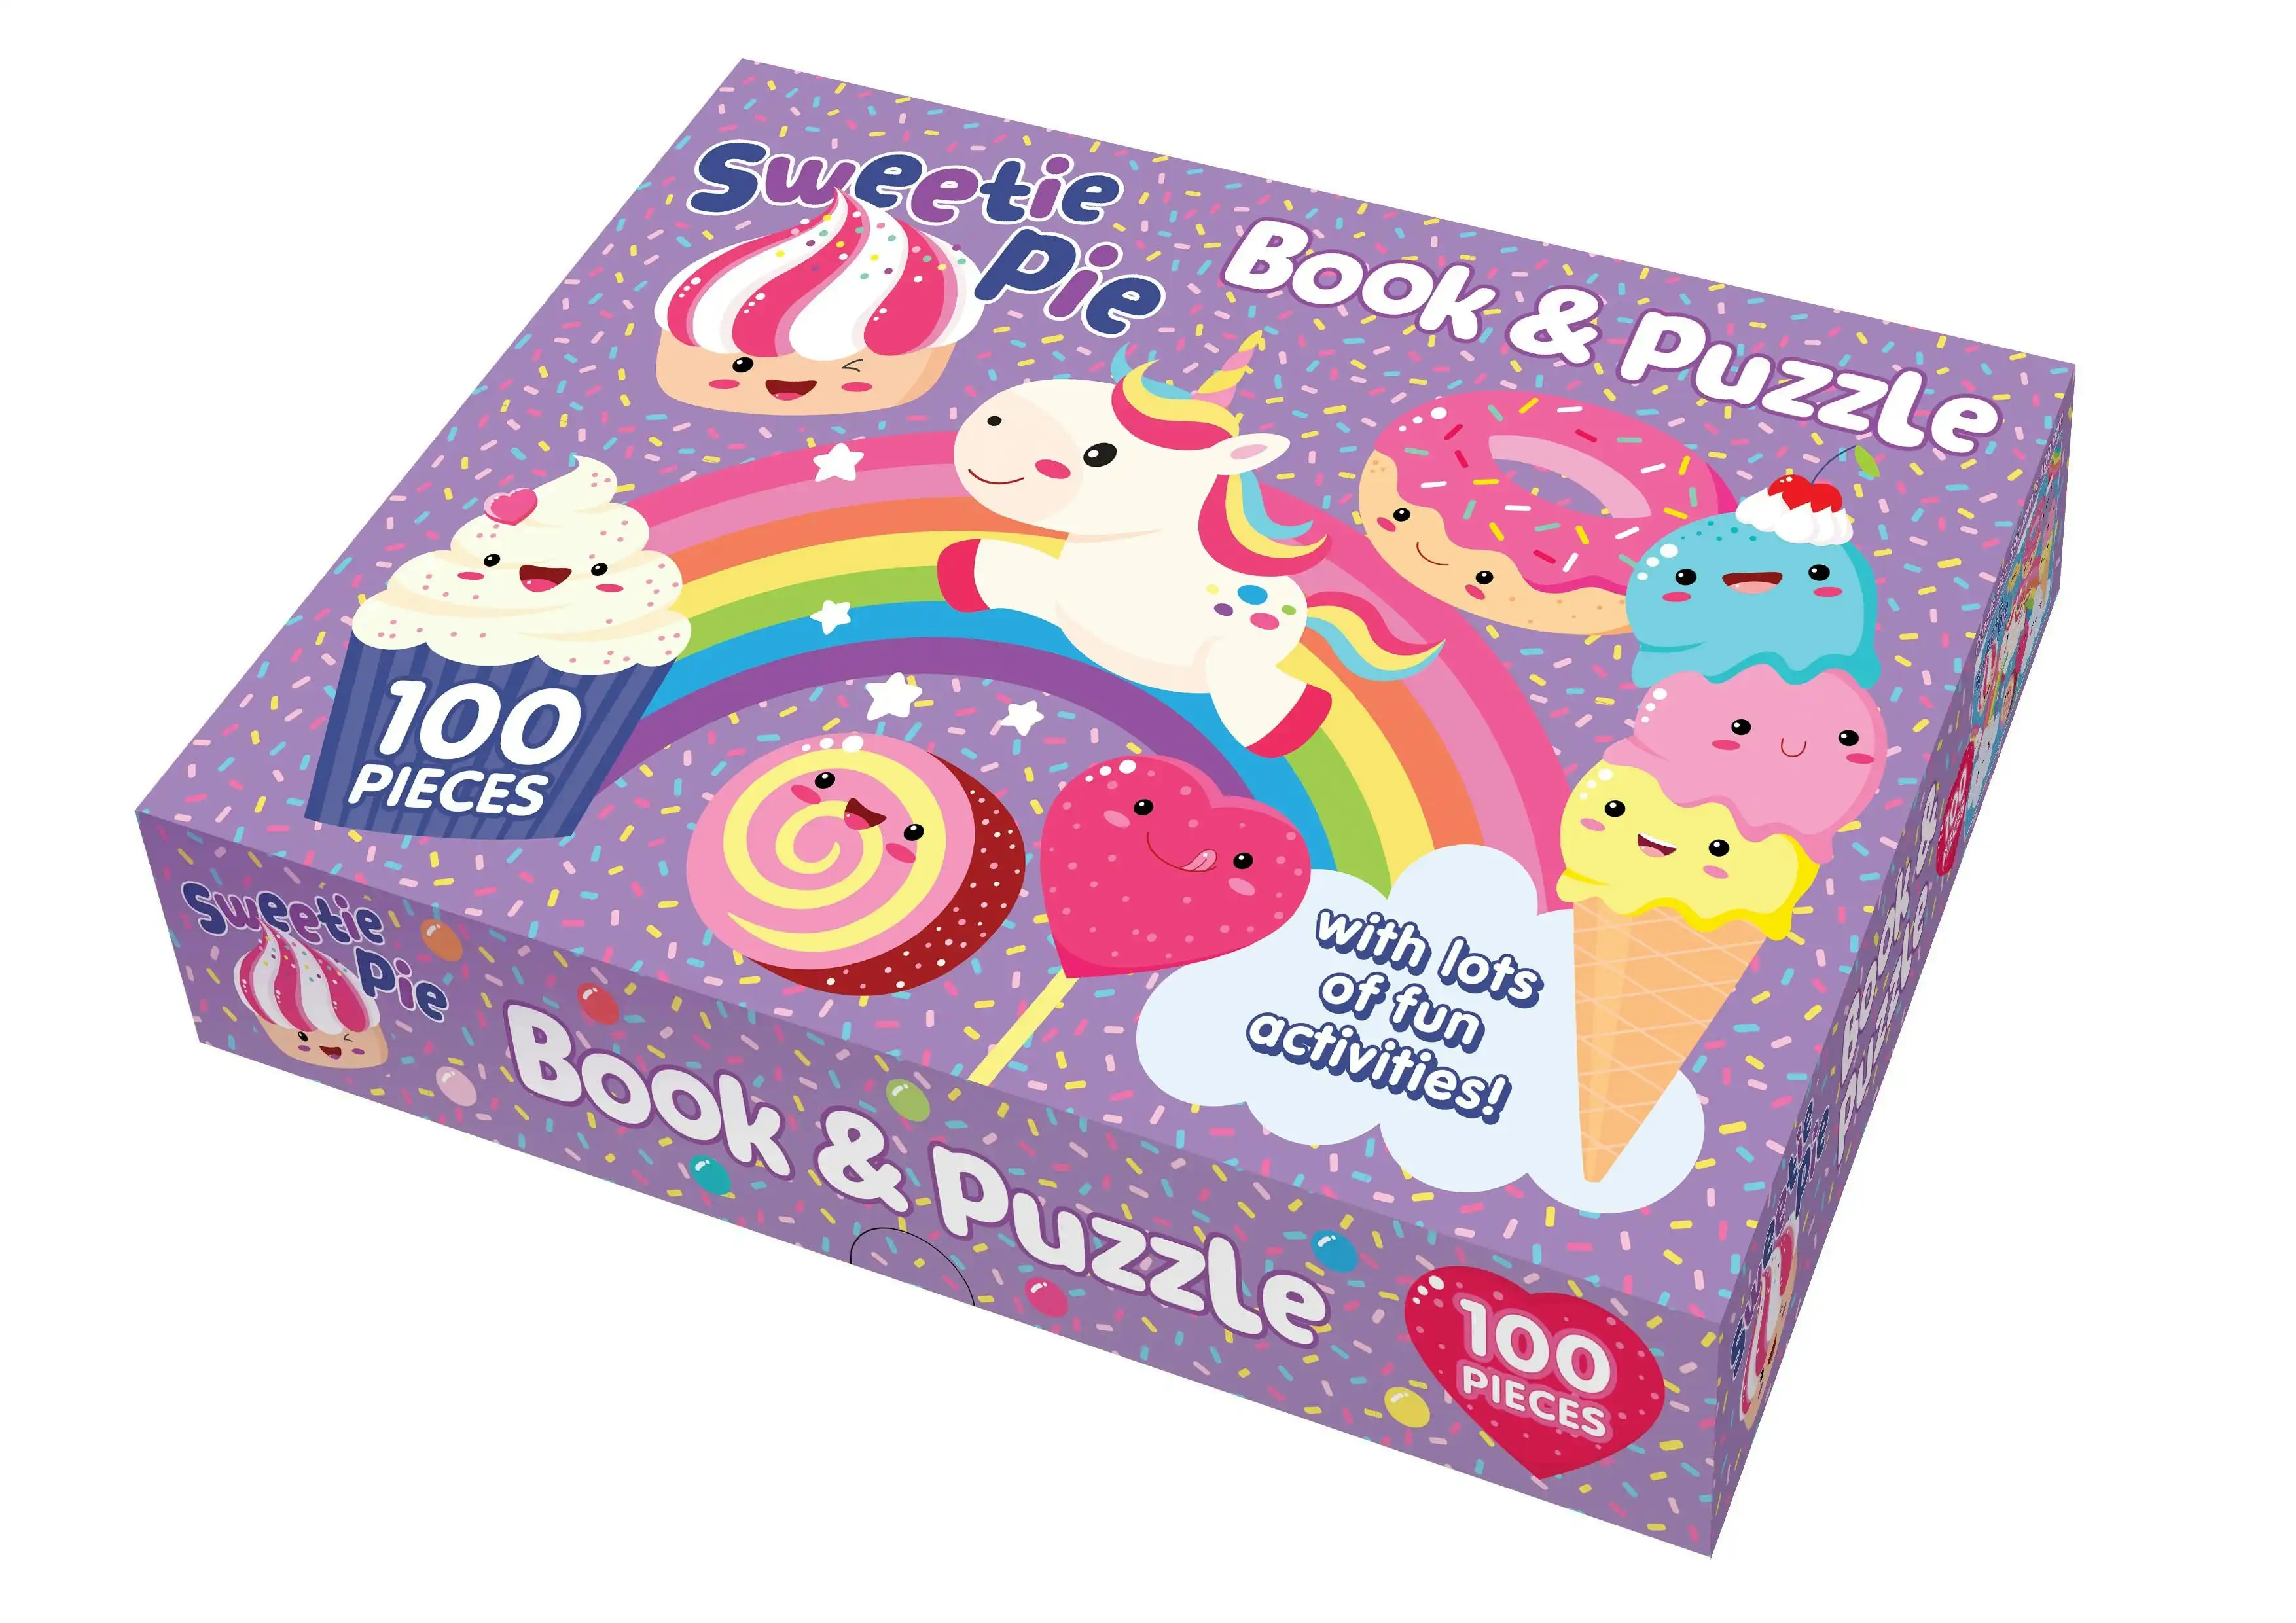 Book & Puzzle, Sweetie Pie